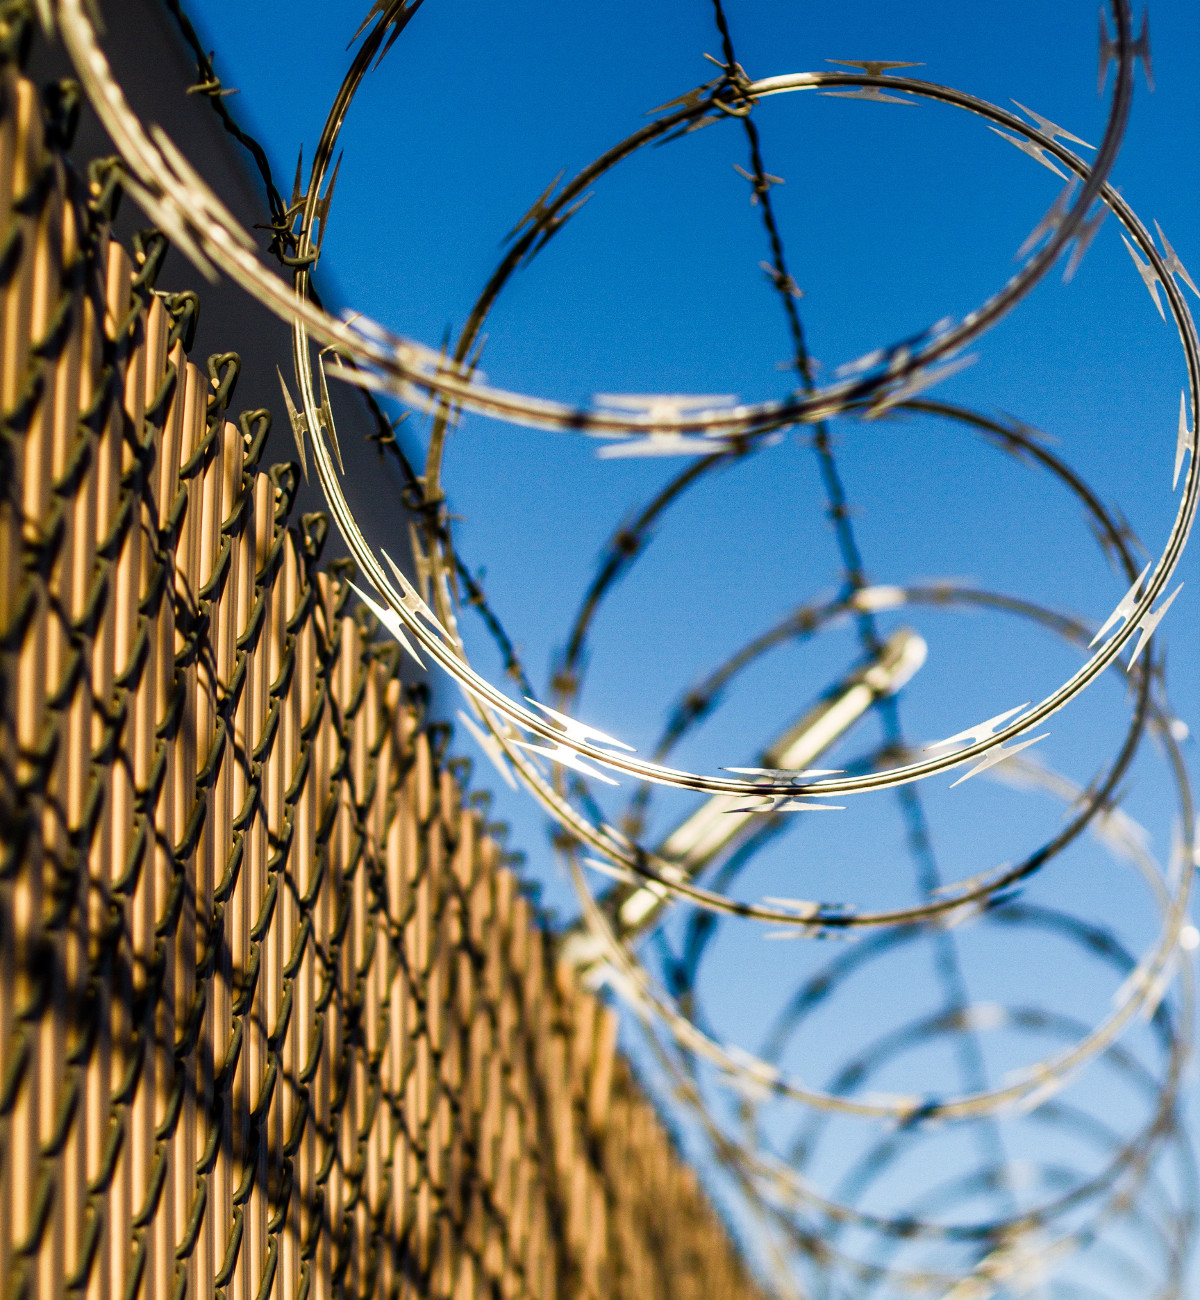 Prison fence